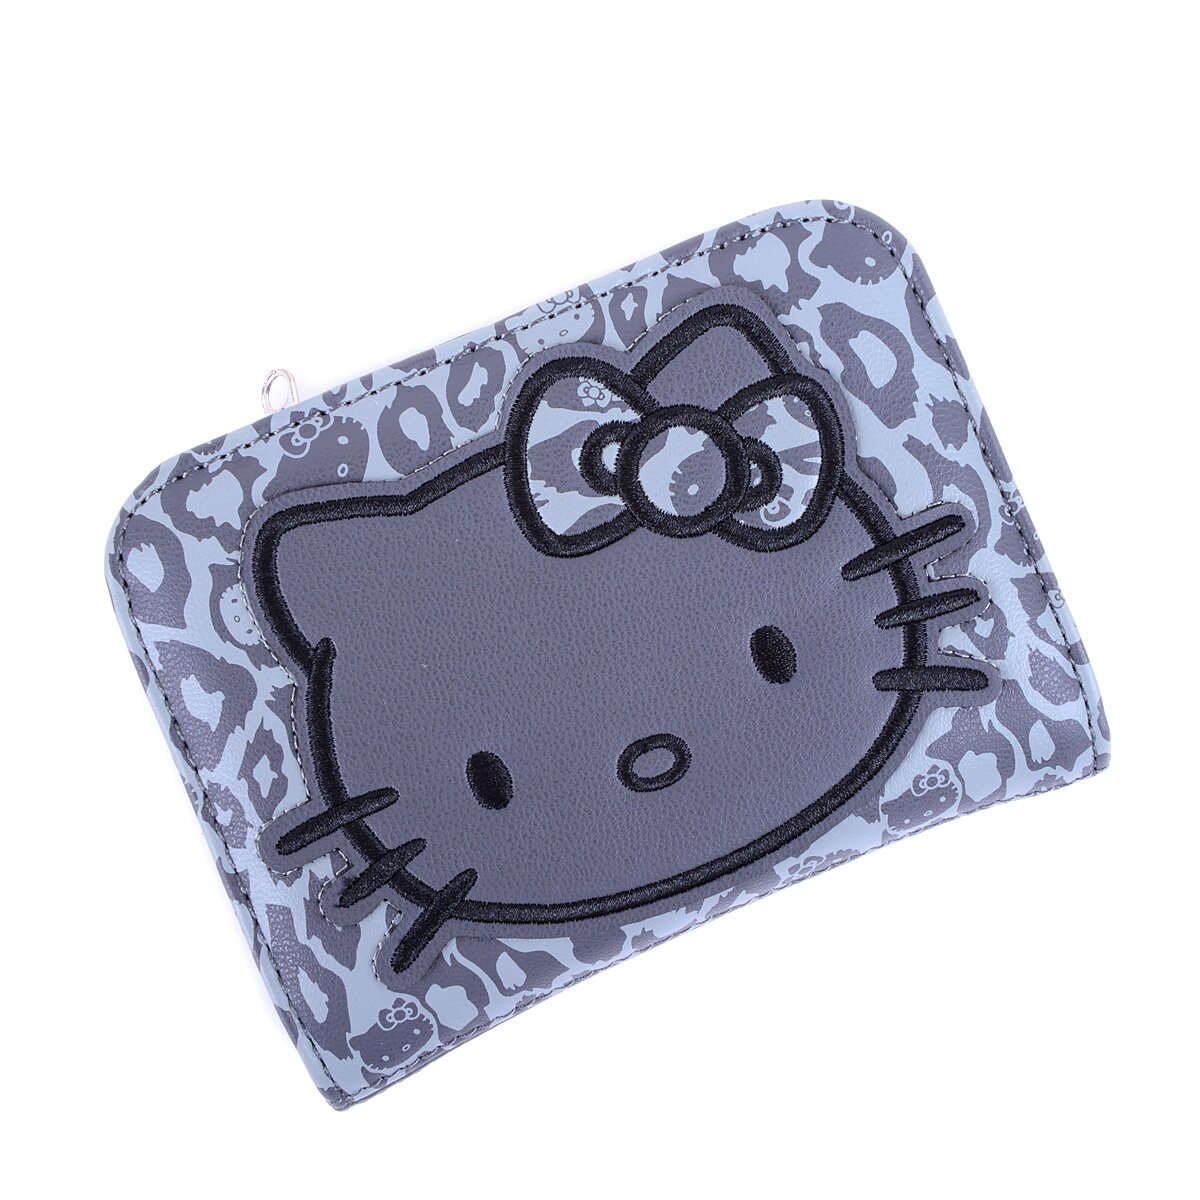 Loungefly Hello Kitty Leopard Print Zip Wallet